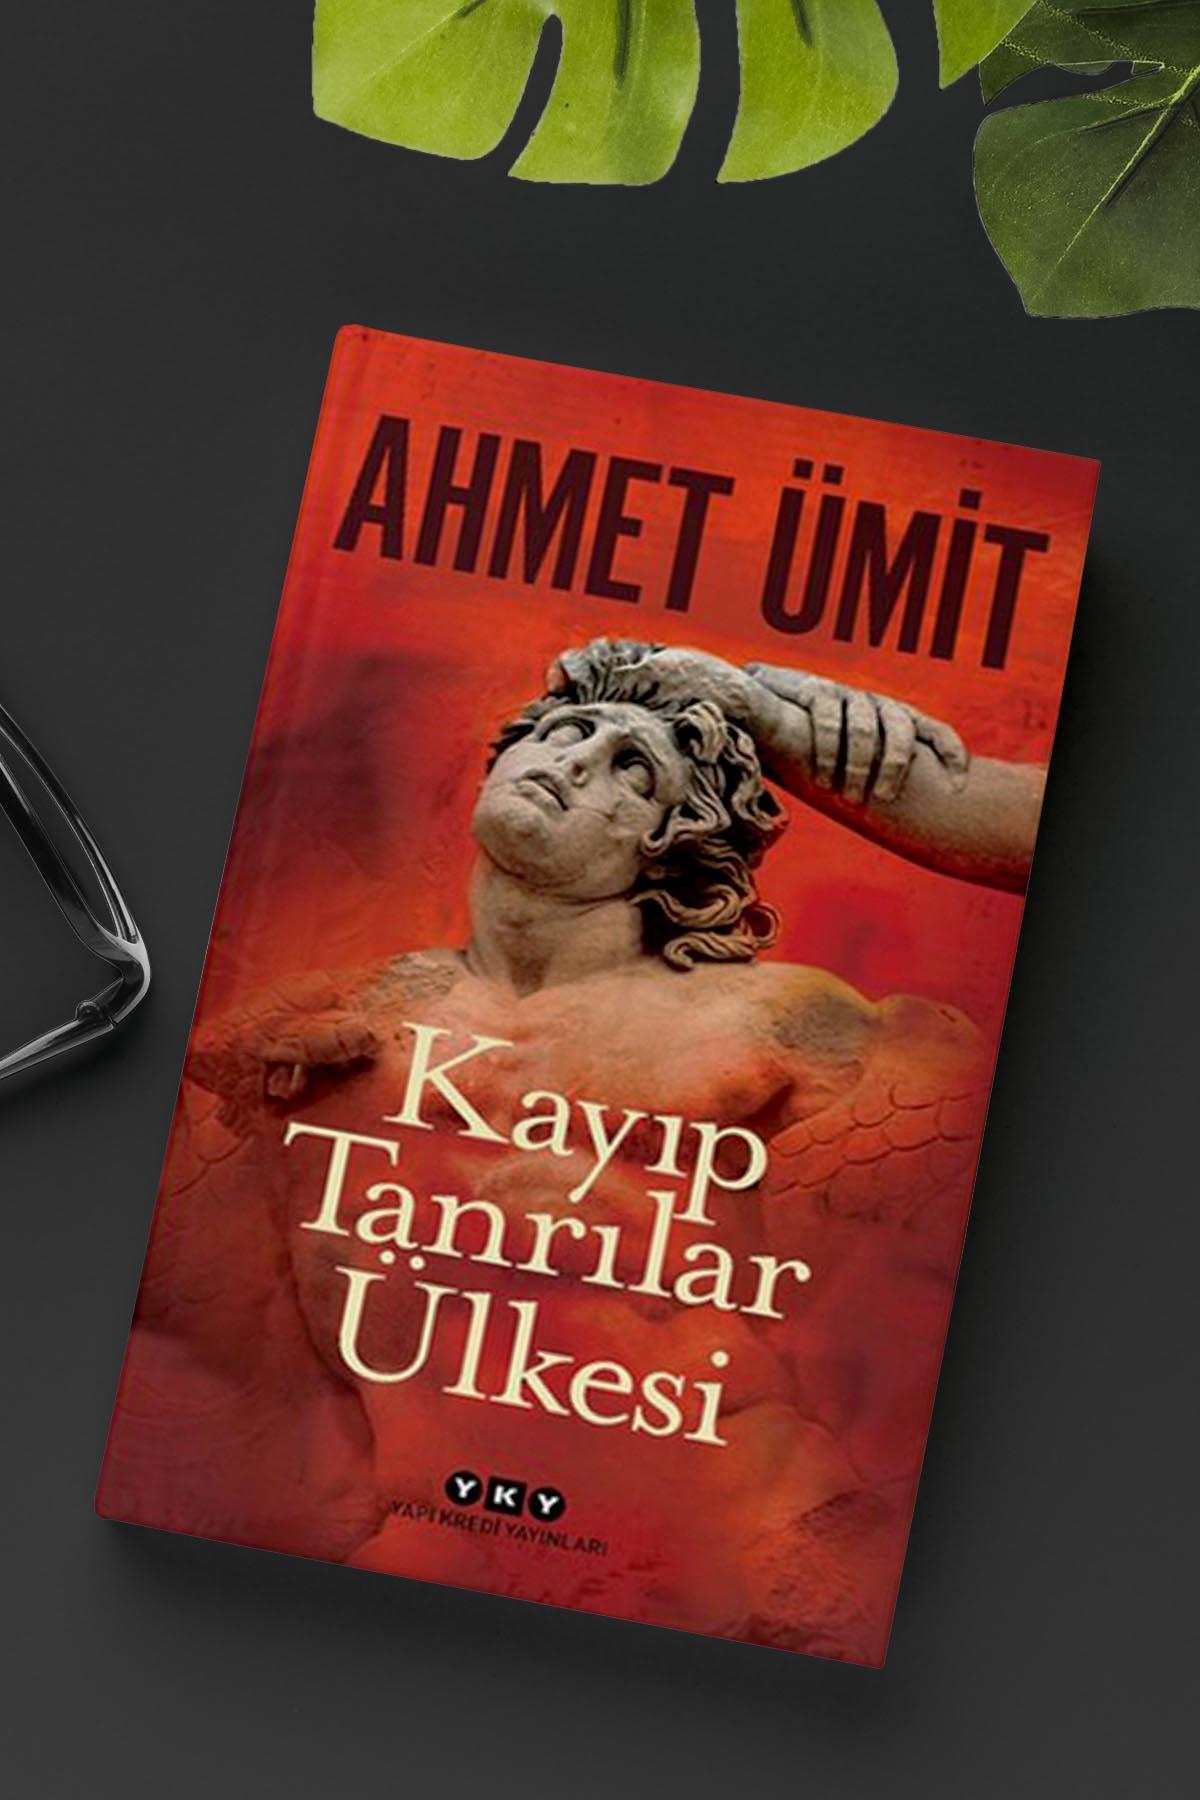 Kayip-Tanrilar-Ulkesi---Ahmet-Umit-resim-406